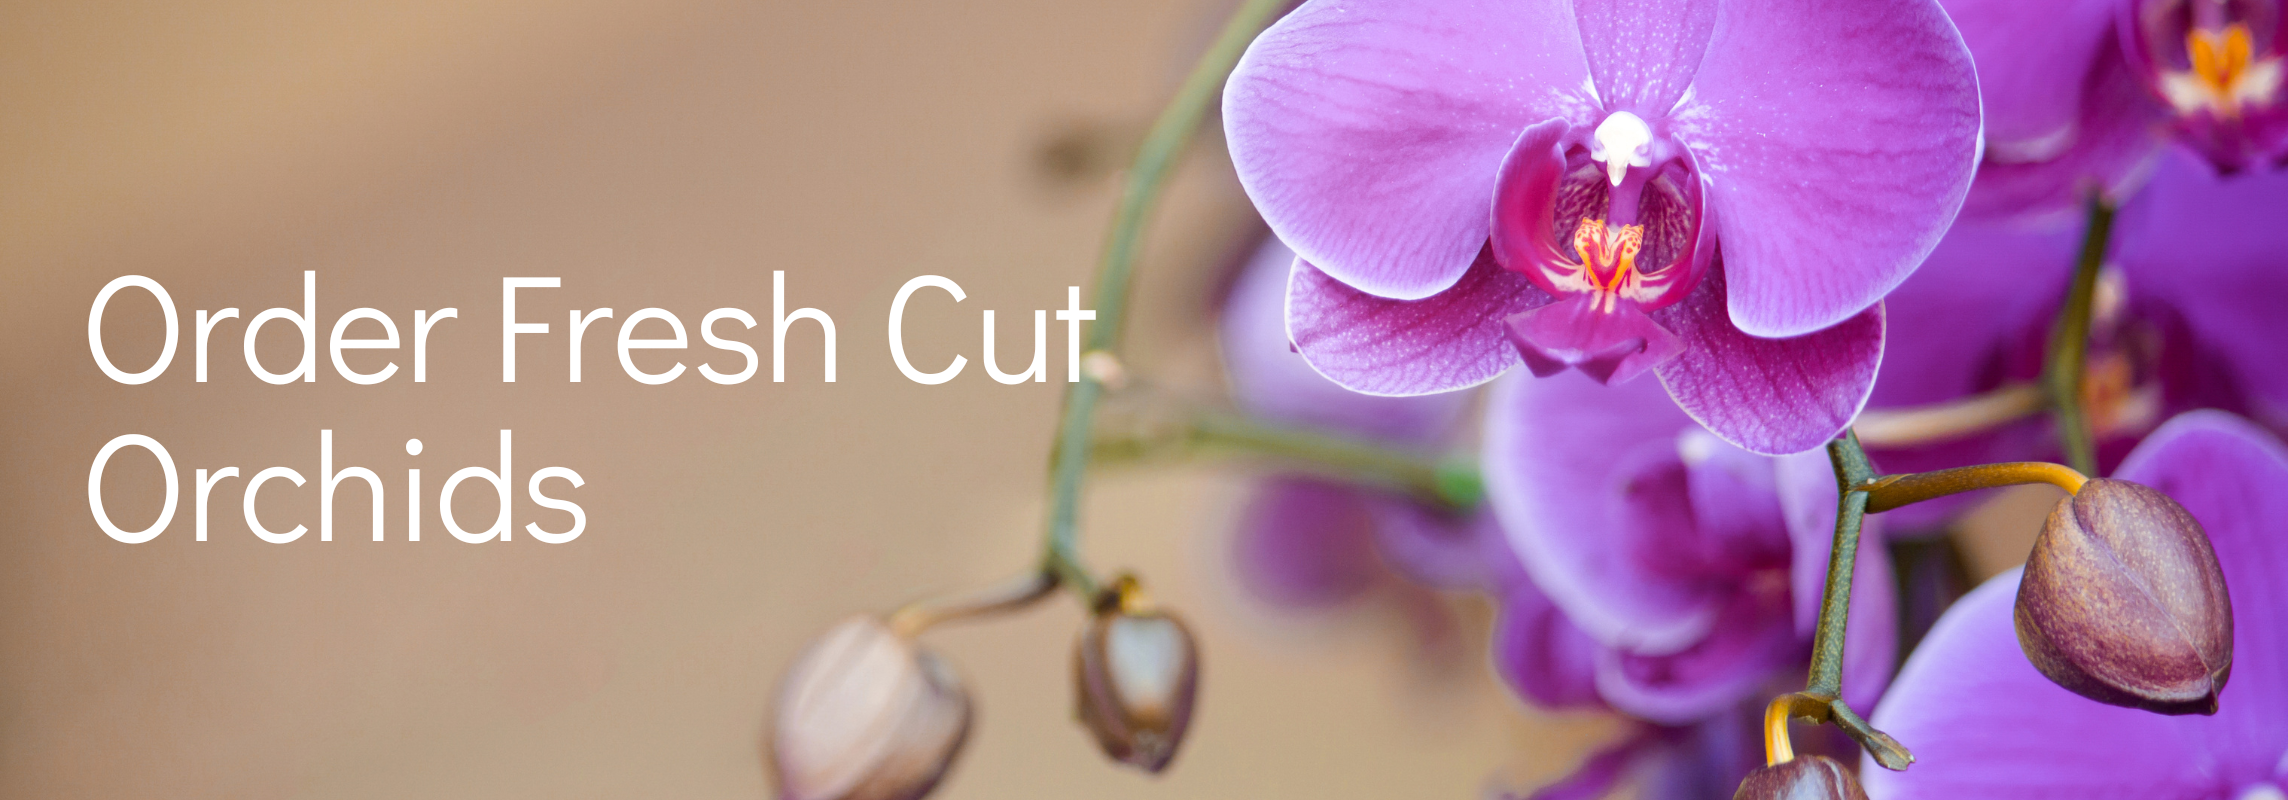 order fresh cut orchids